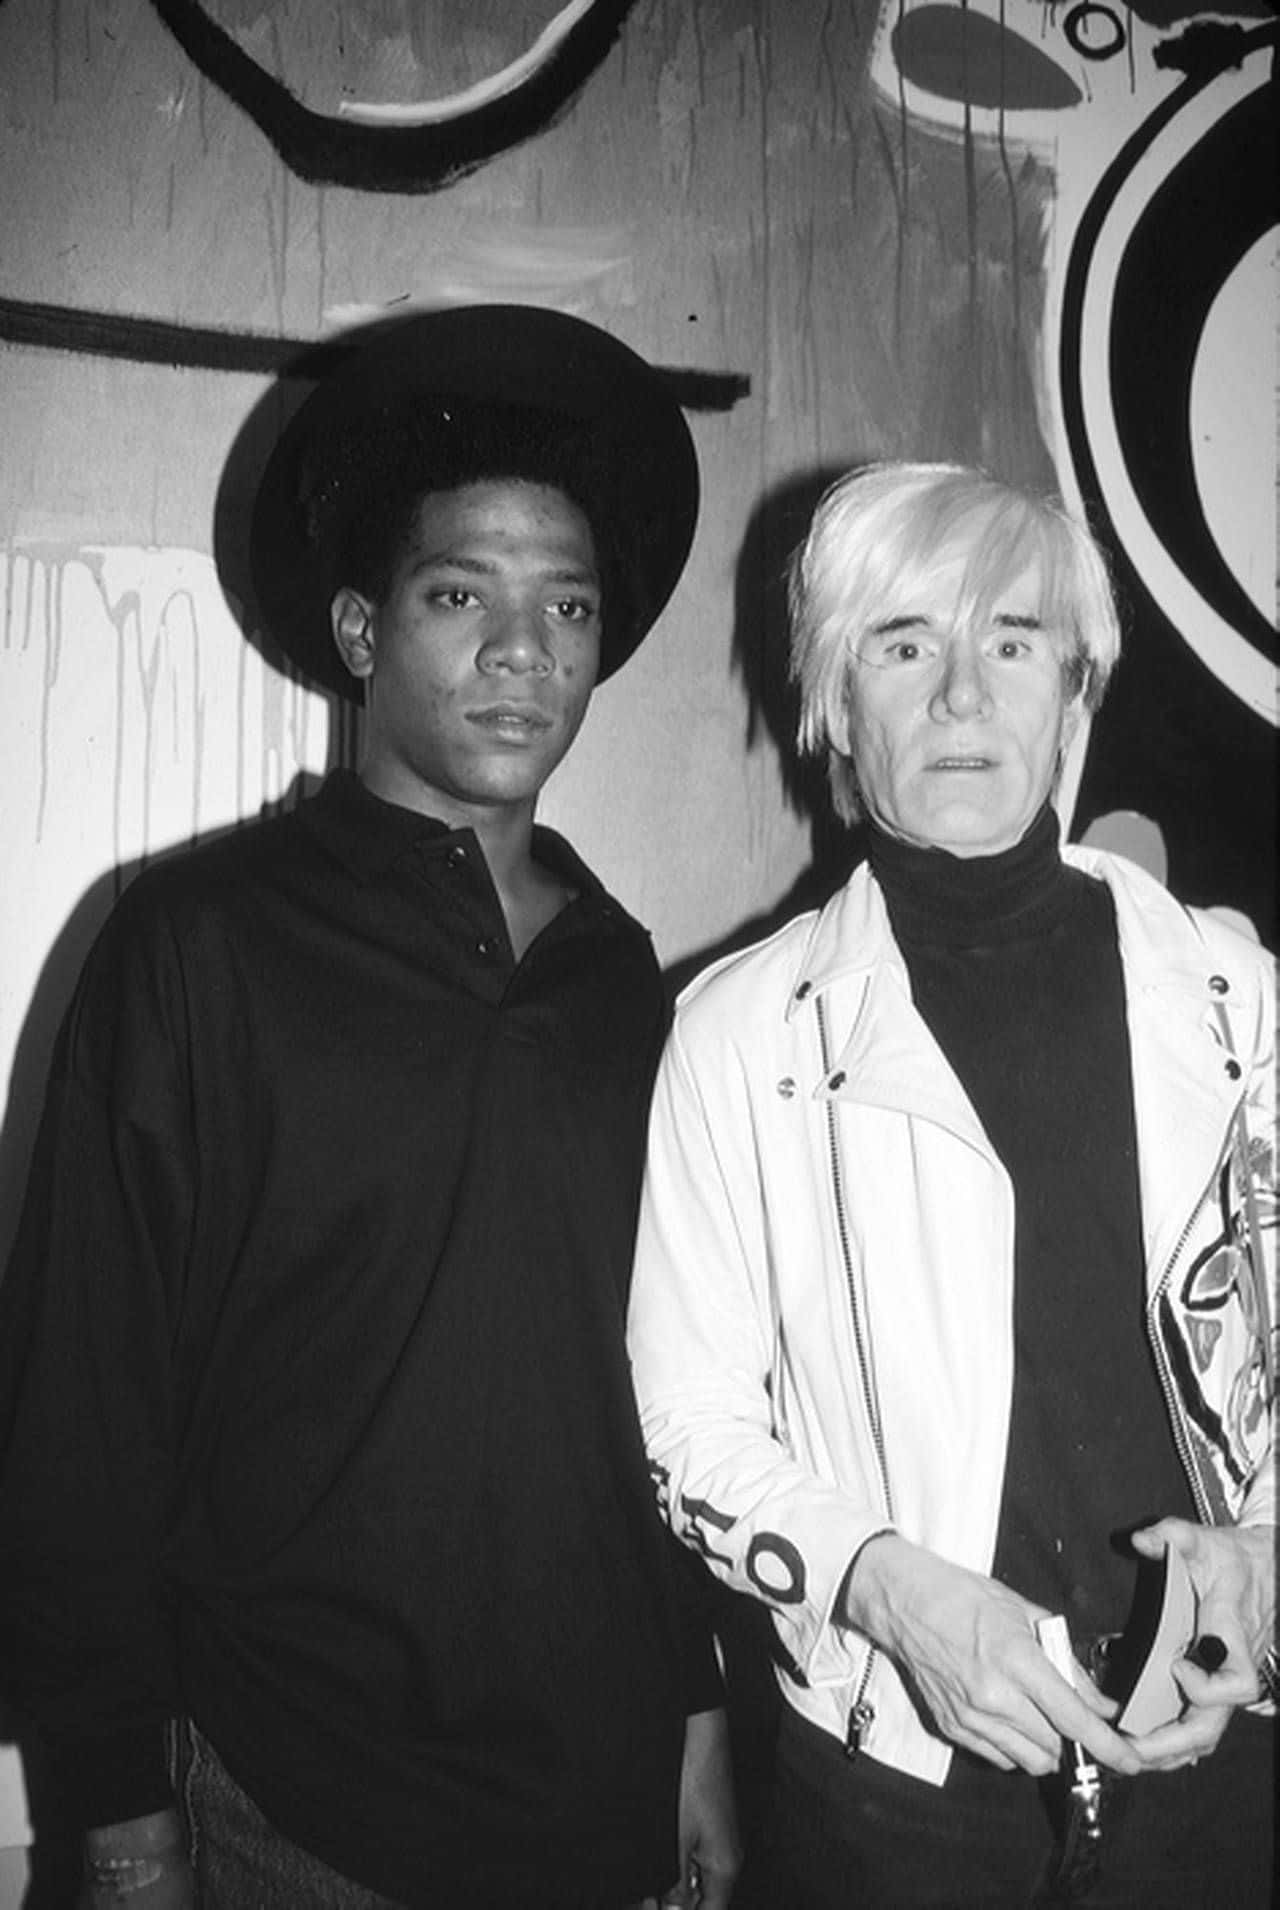 "Andy Warhol, the Prolific Pop Artist"